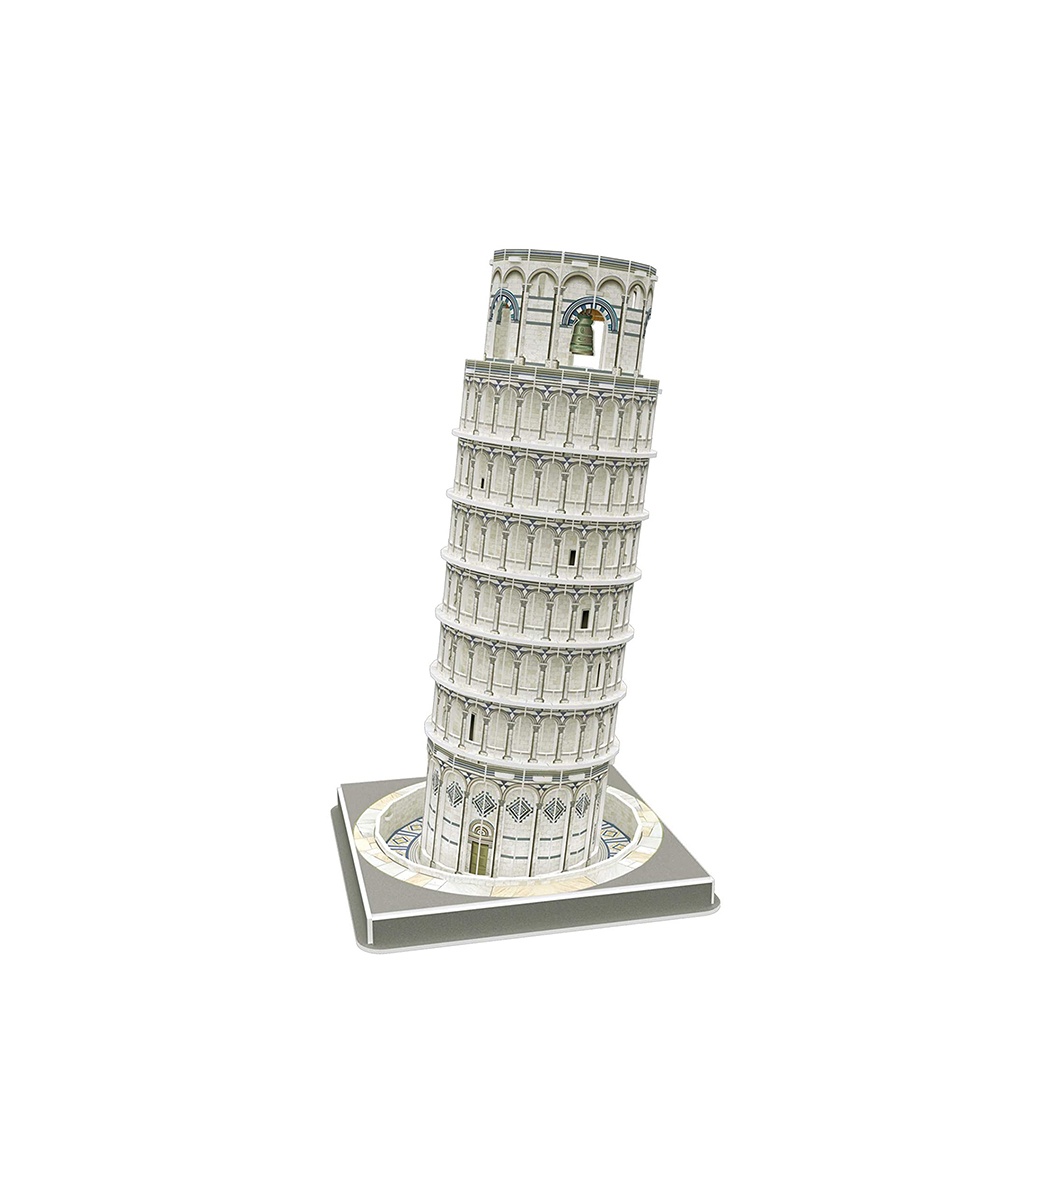 CubicFun 3D Puzzle Leaning Tower of Pisa C241h Model Building Kits